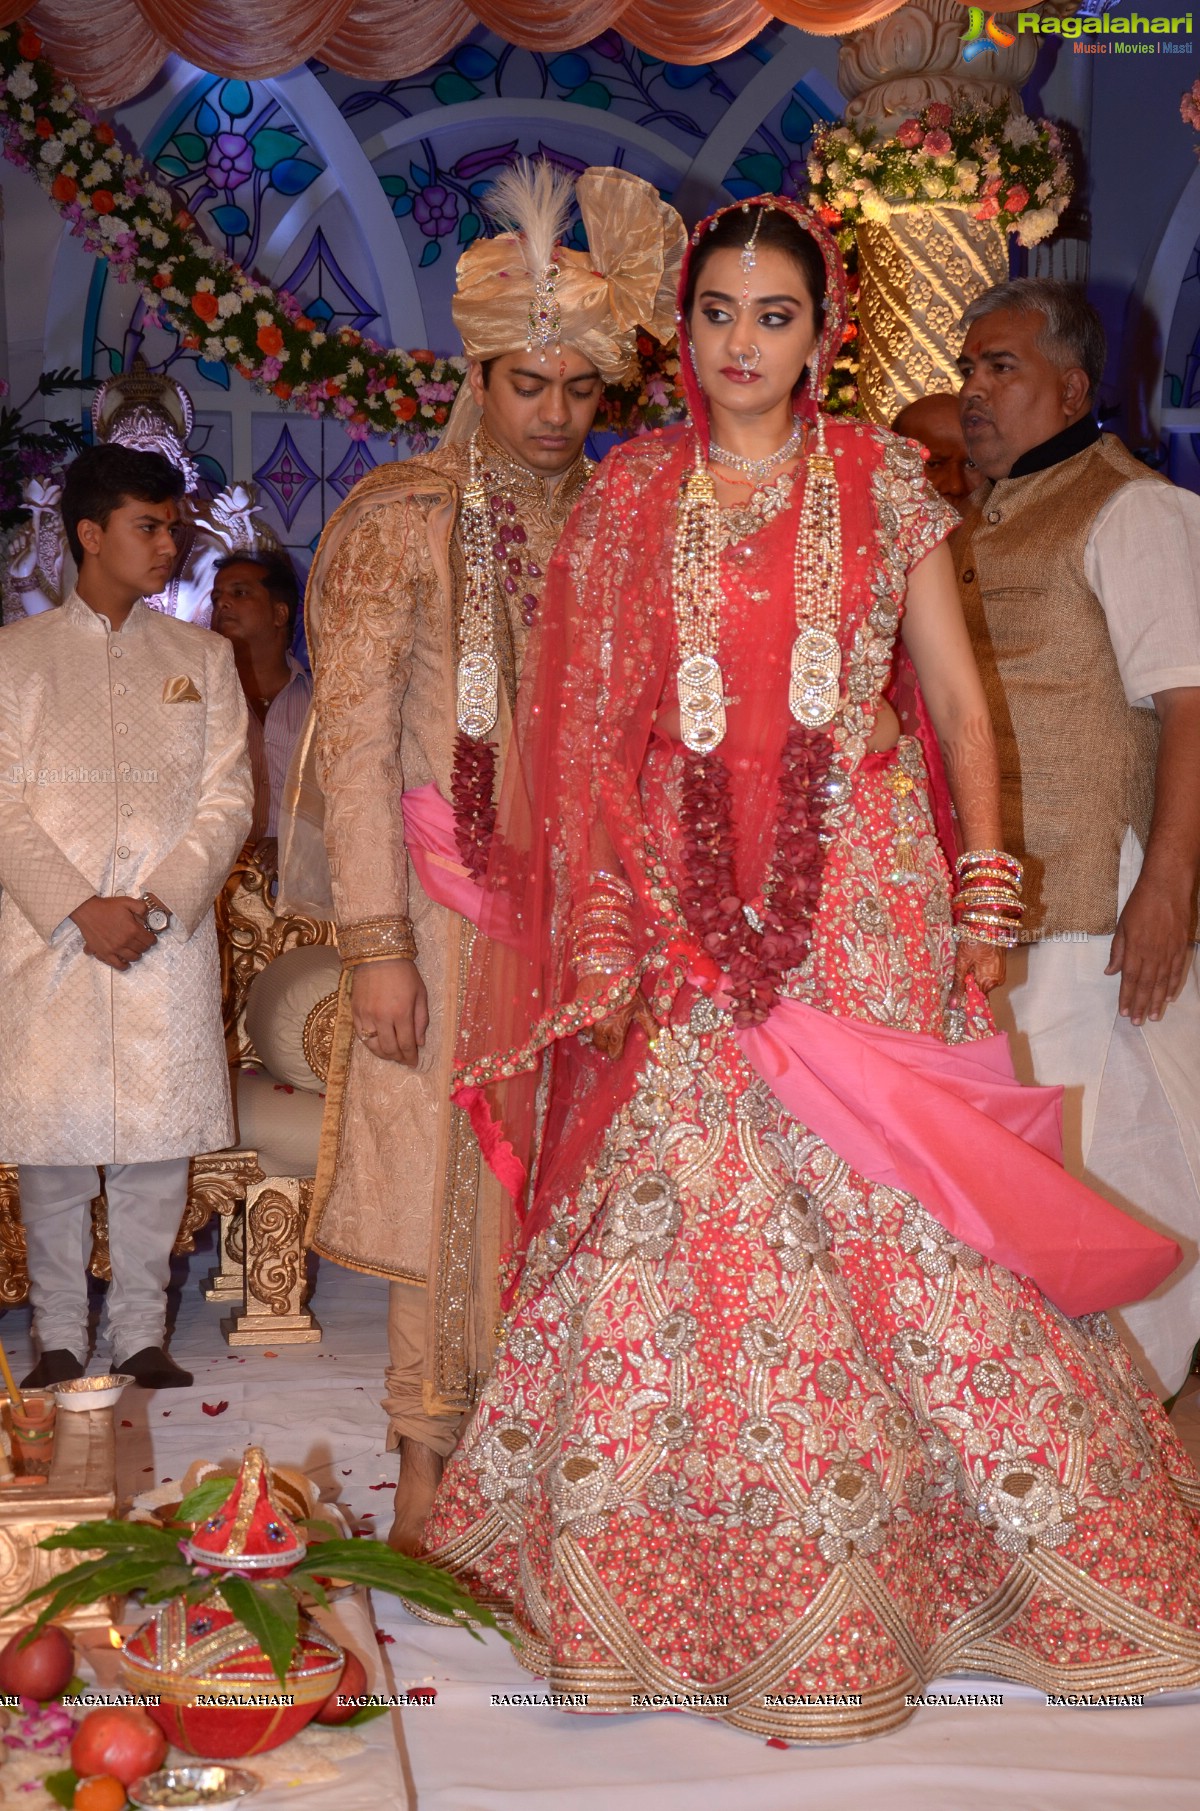 Grand Wedding Reception of Ashish and Ravisha at Novotel, Hyderabad